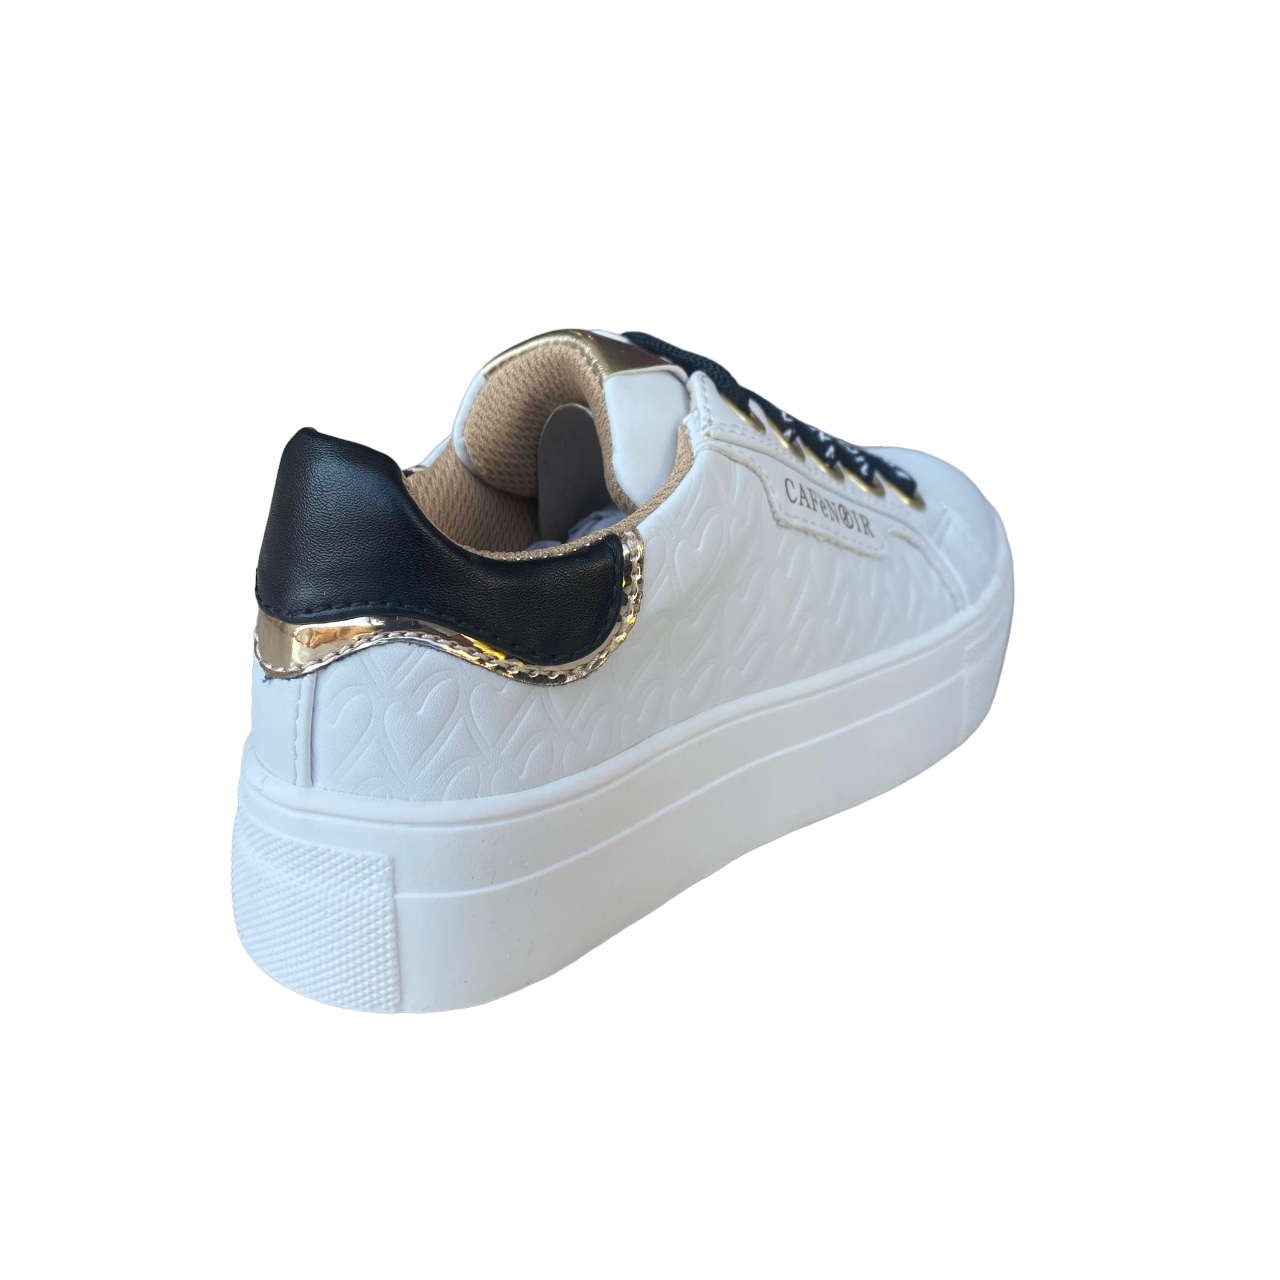 CafèNoir girl&#39;s sneakers shoe with side zip C-2281 C1738b white